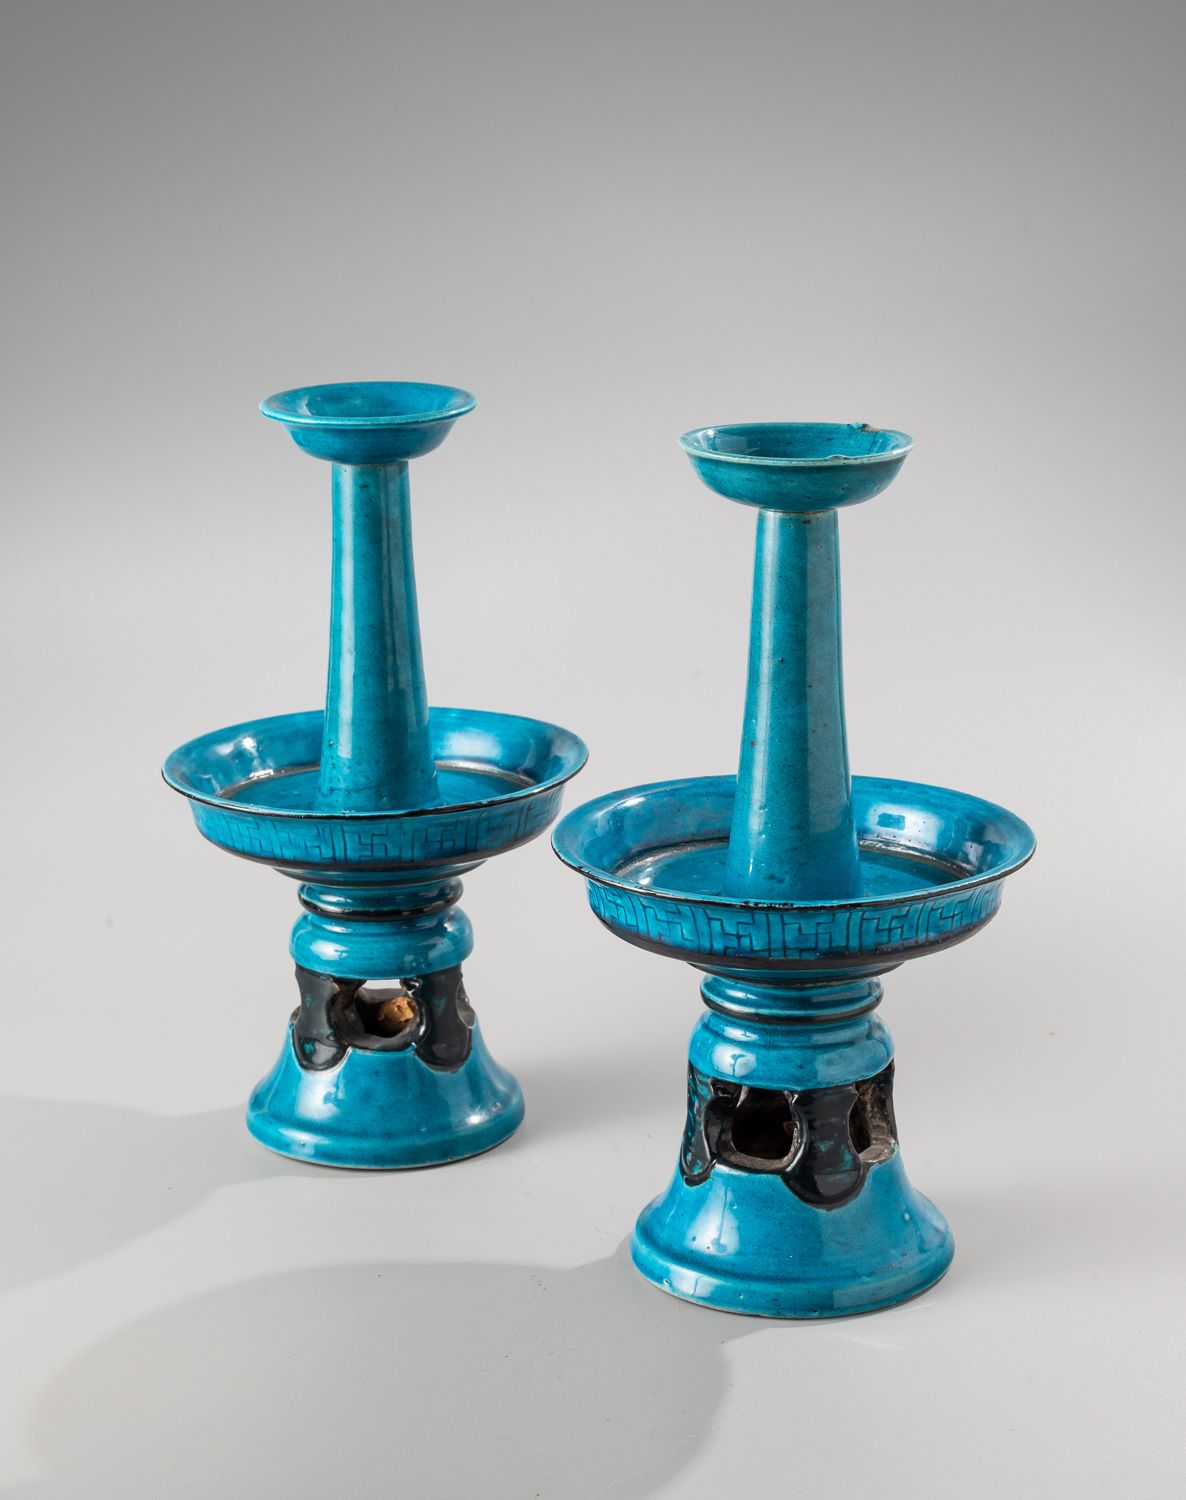 Null CHINA, 18. Jahrhundert

Ein Paar türkis glasierte Keramik-Kerzenständer

tü&hellip;